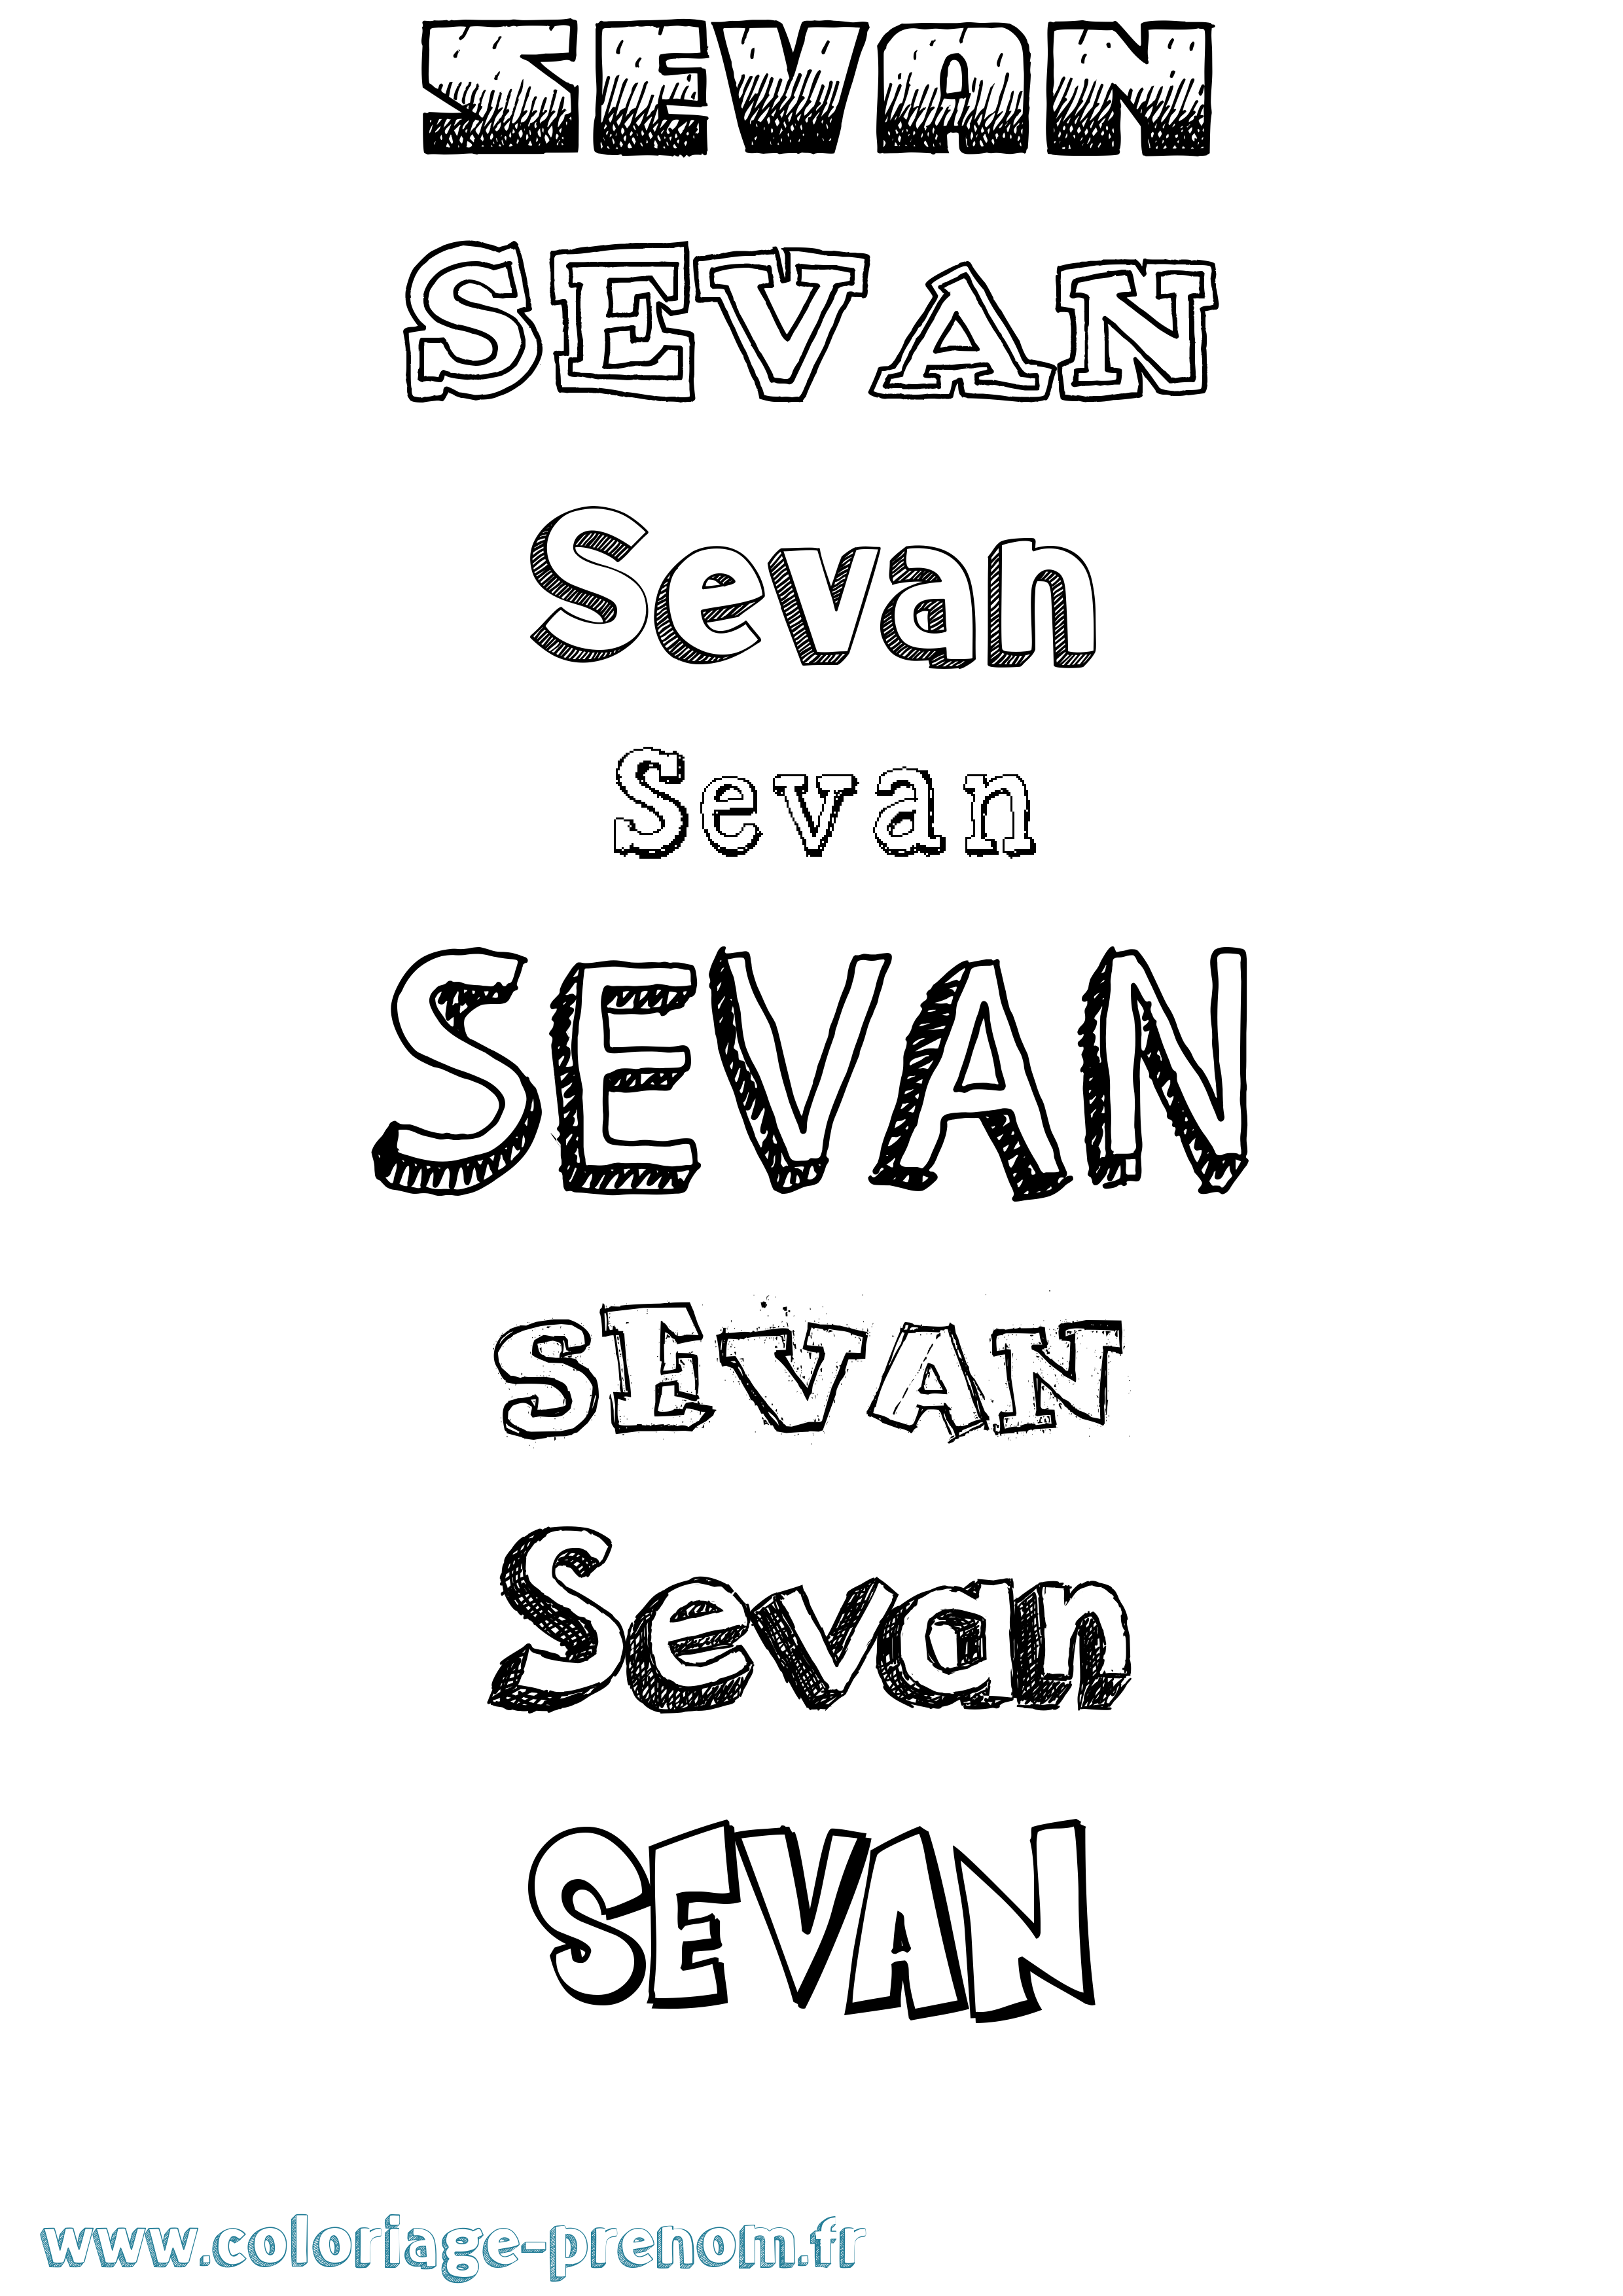 Coloriage prénom Sevan Dessiné